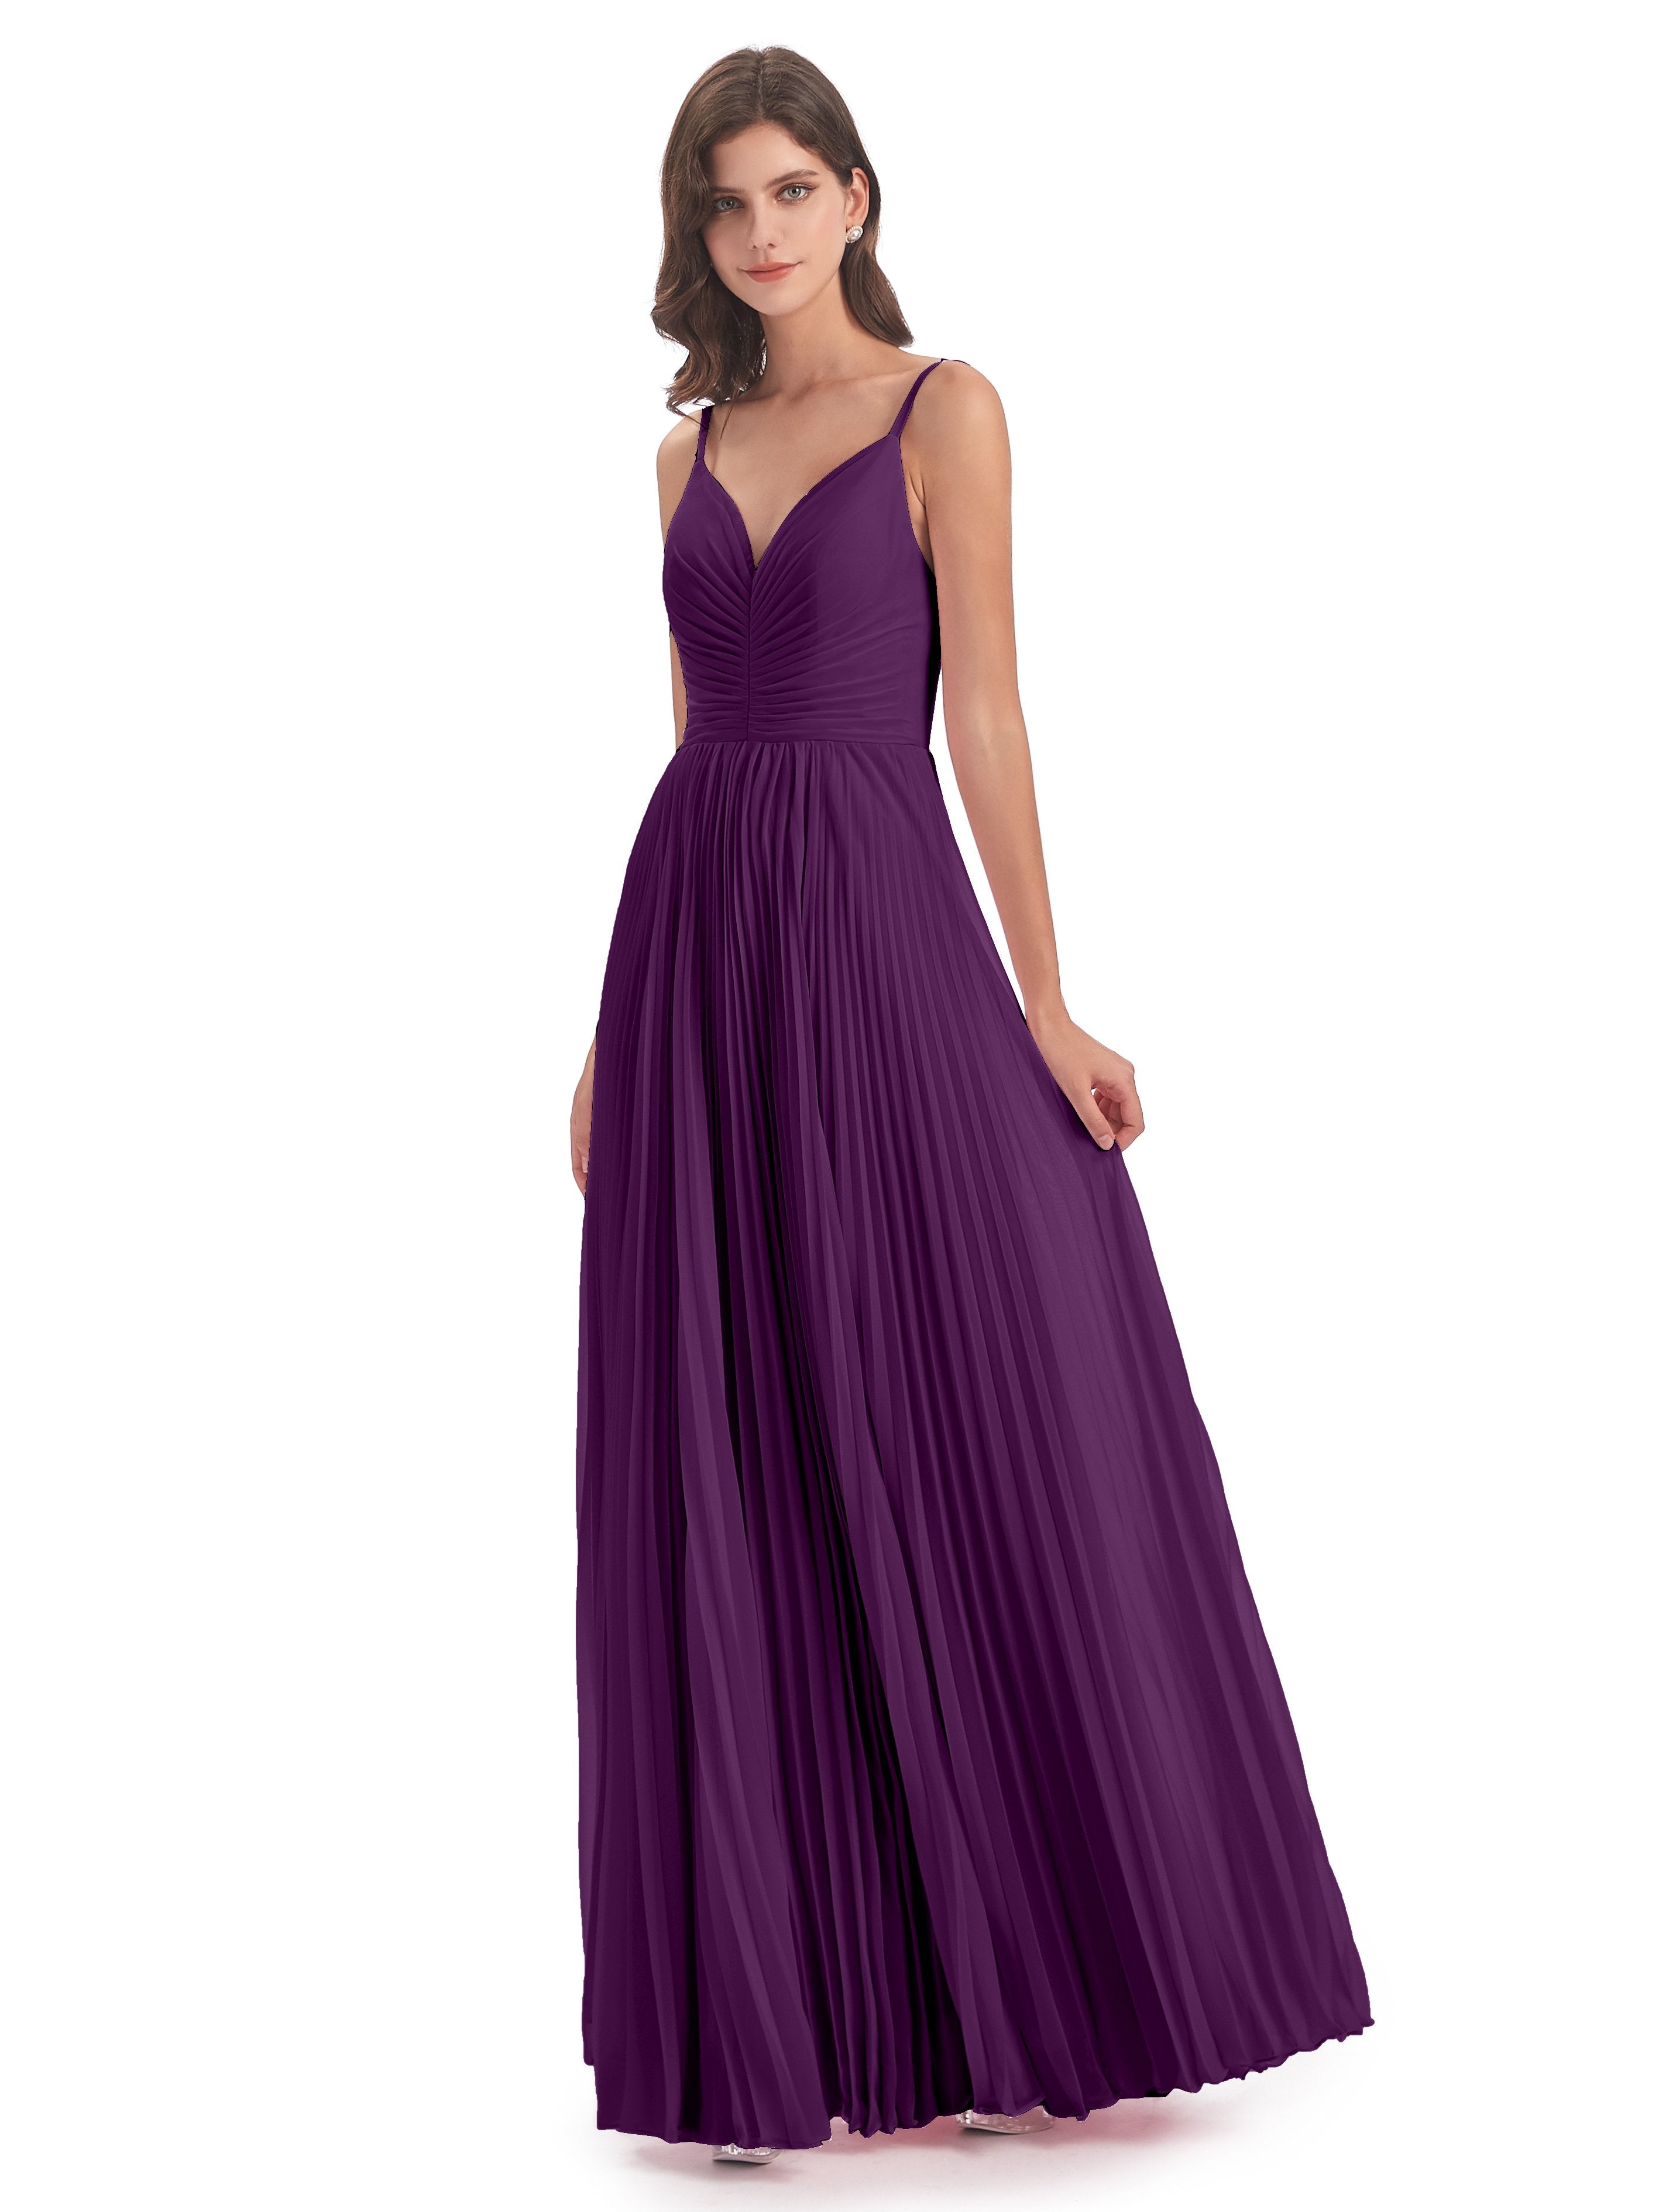 60+ Colors: Grape Bridesmaid Dresses (FREE Custom Size)-Cicinia